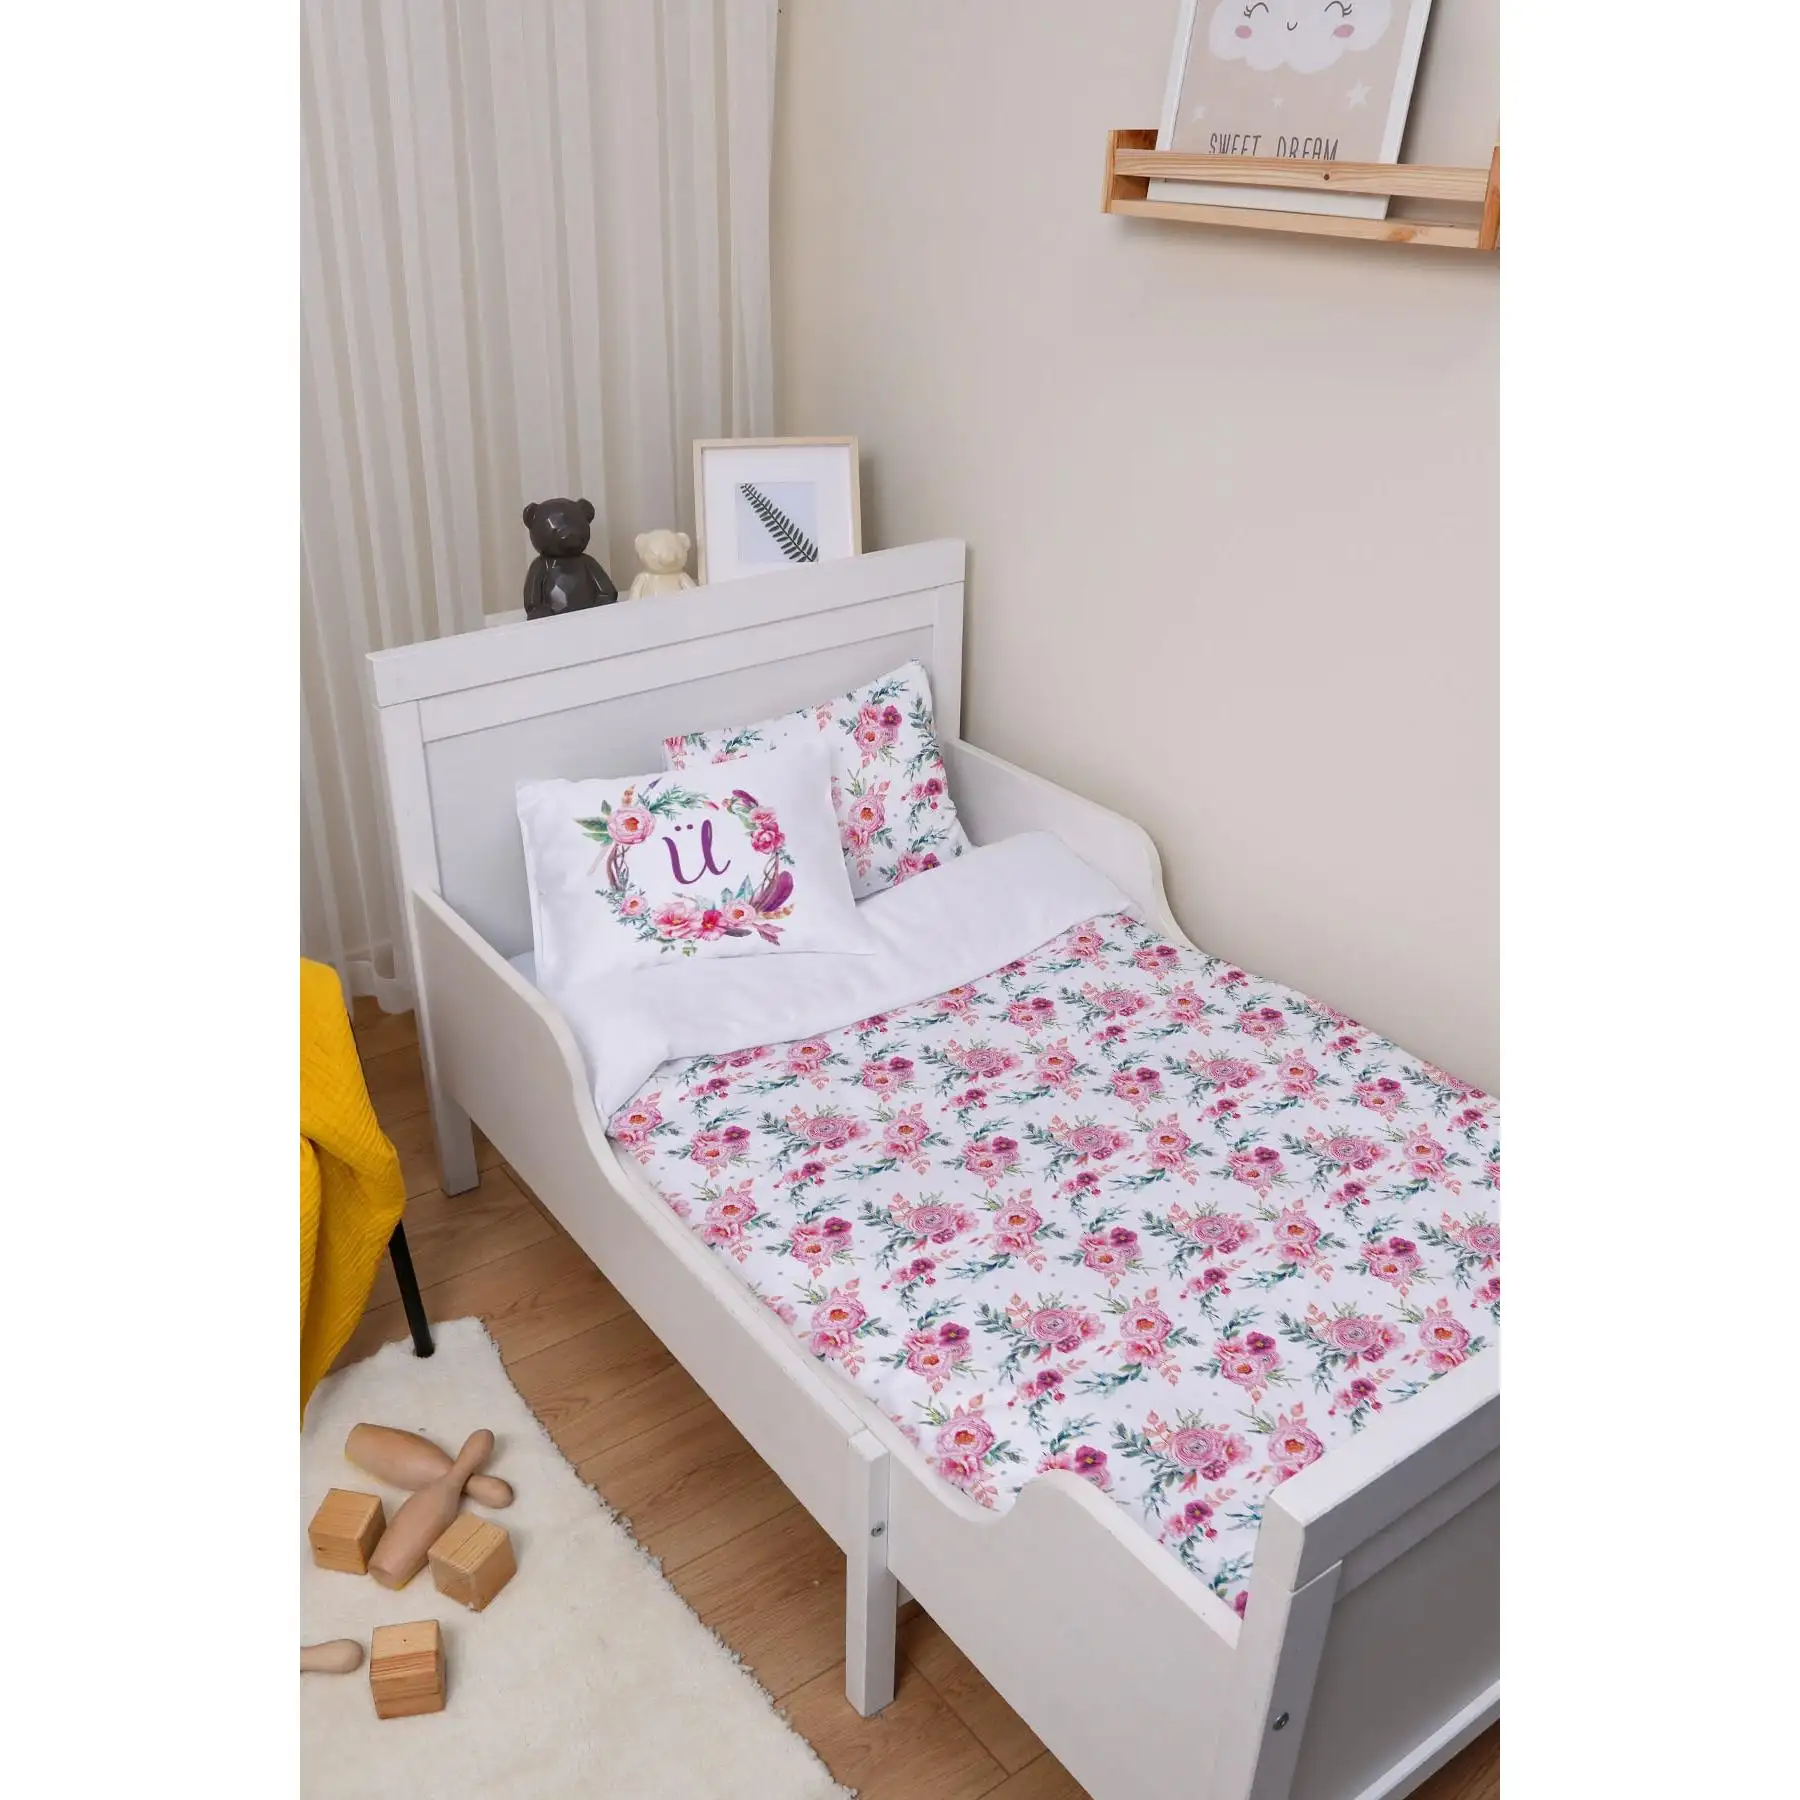 Park Bed Crib Duvet Cover Set (80x120) - Letter Series - Pink Flowers - Letter U